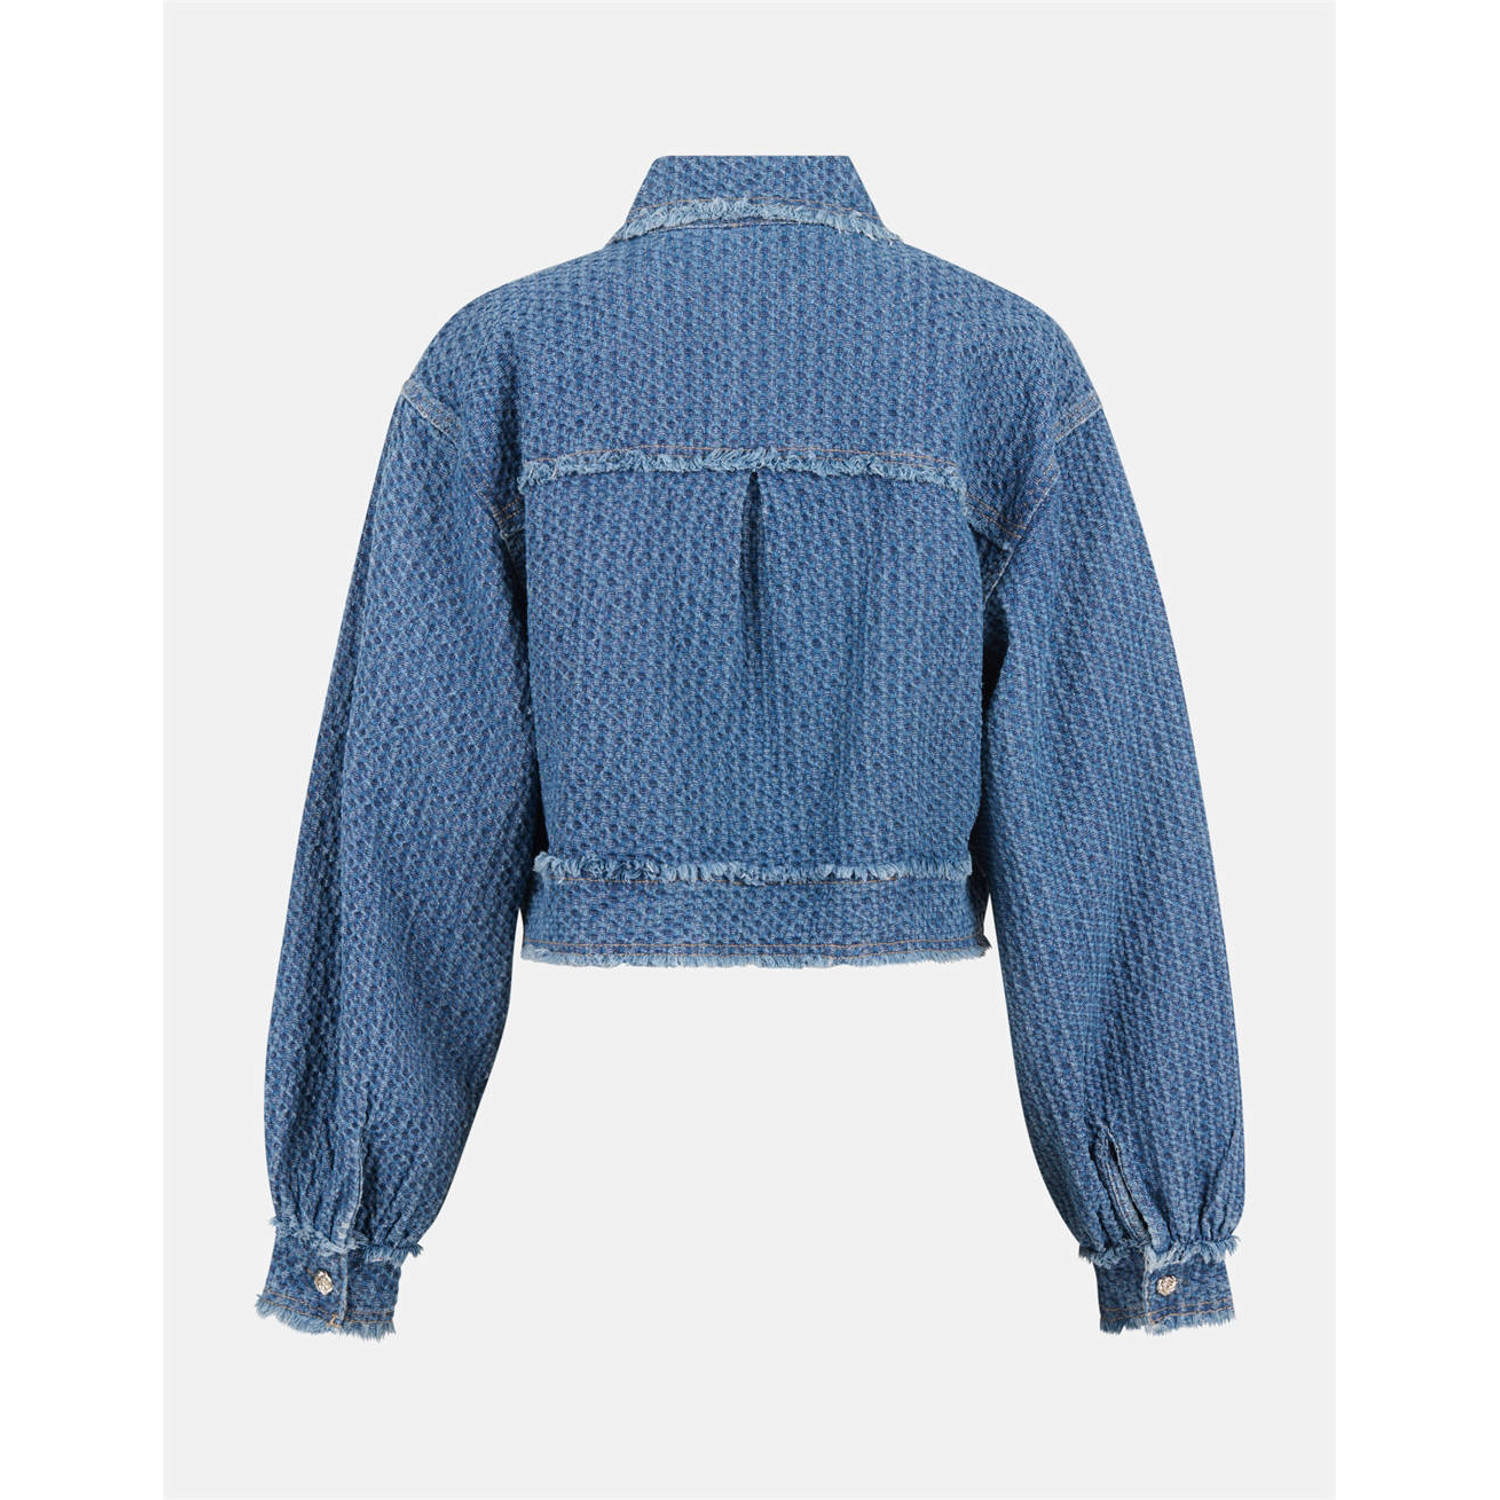 Shoeby tweed jasje medium blue denim